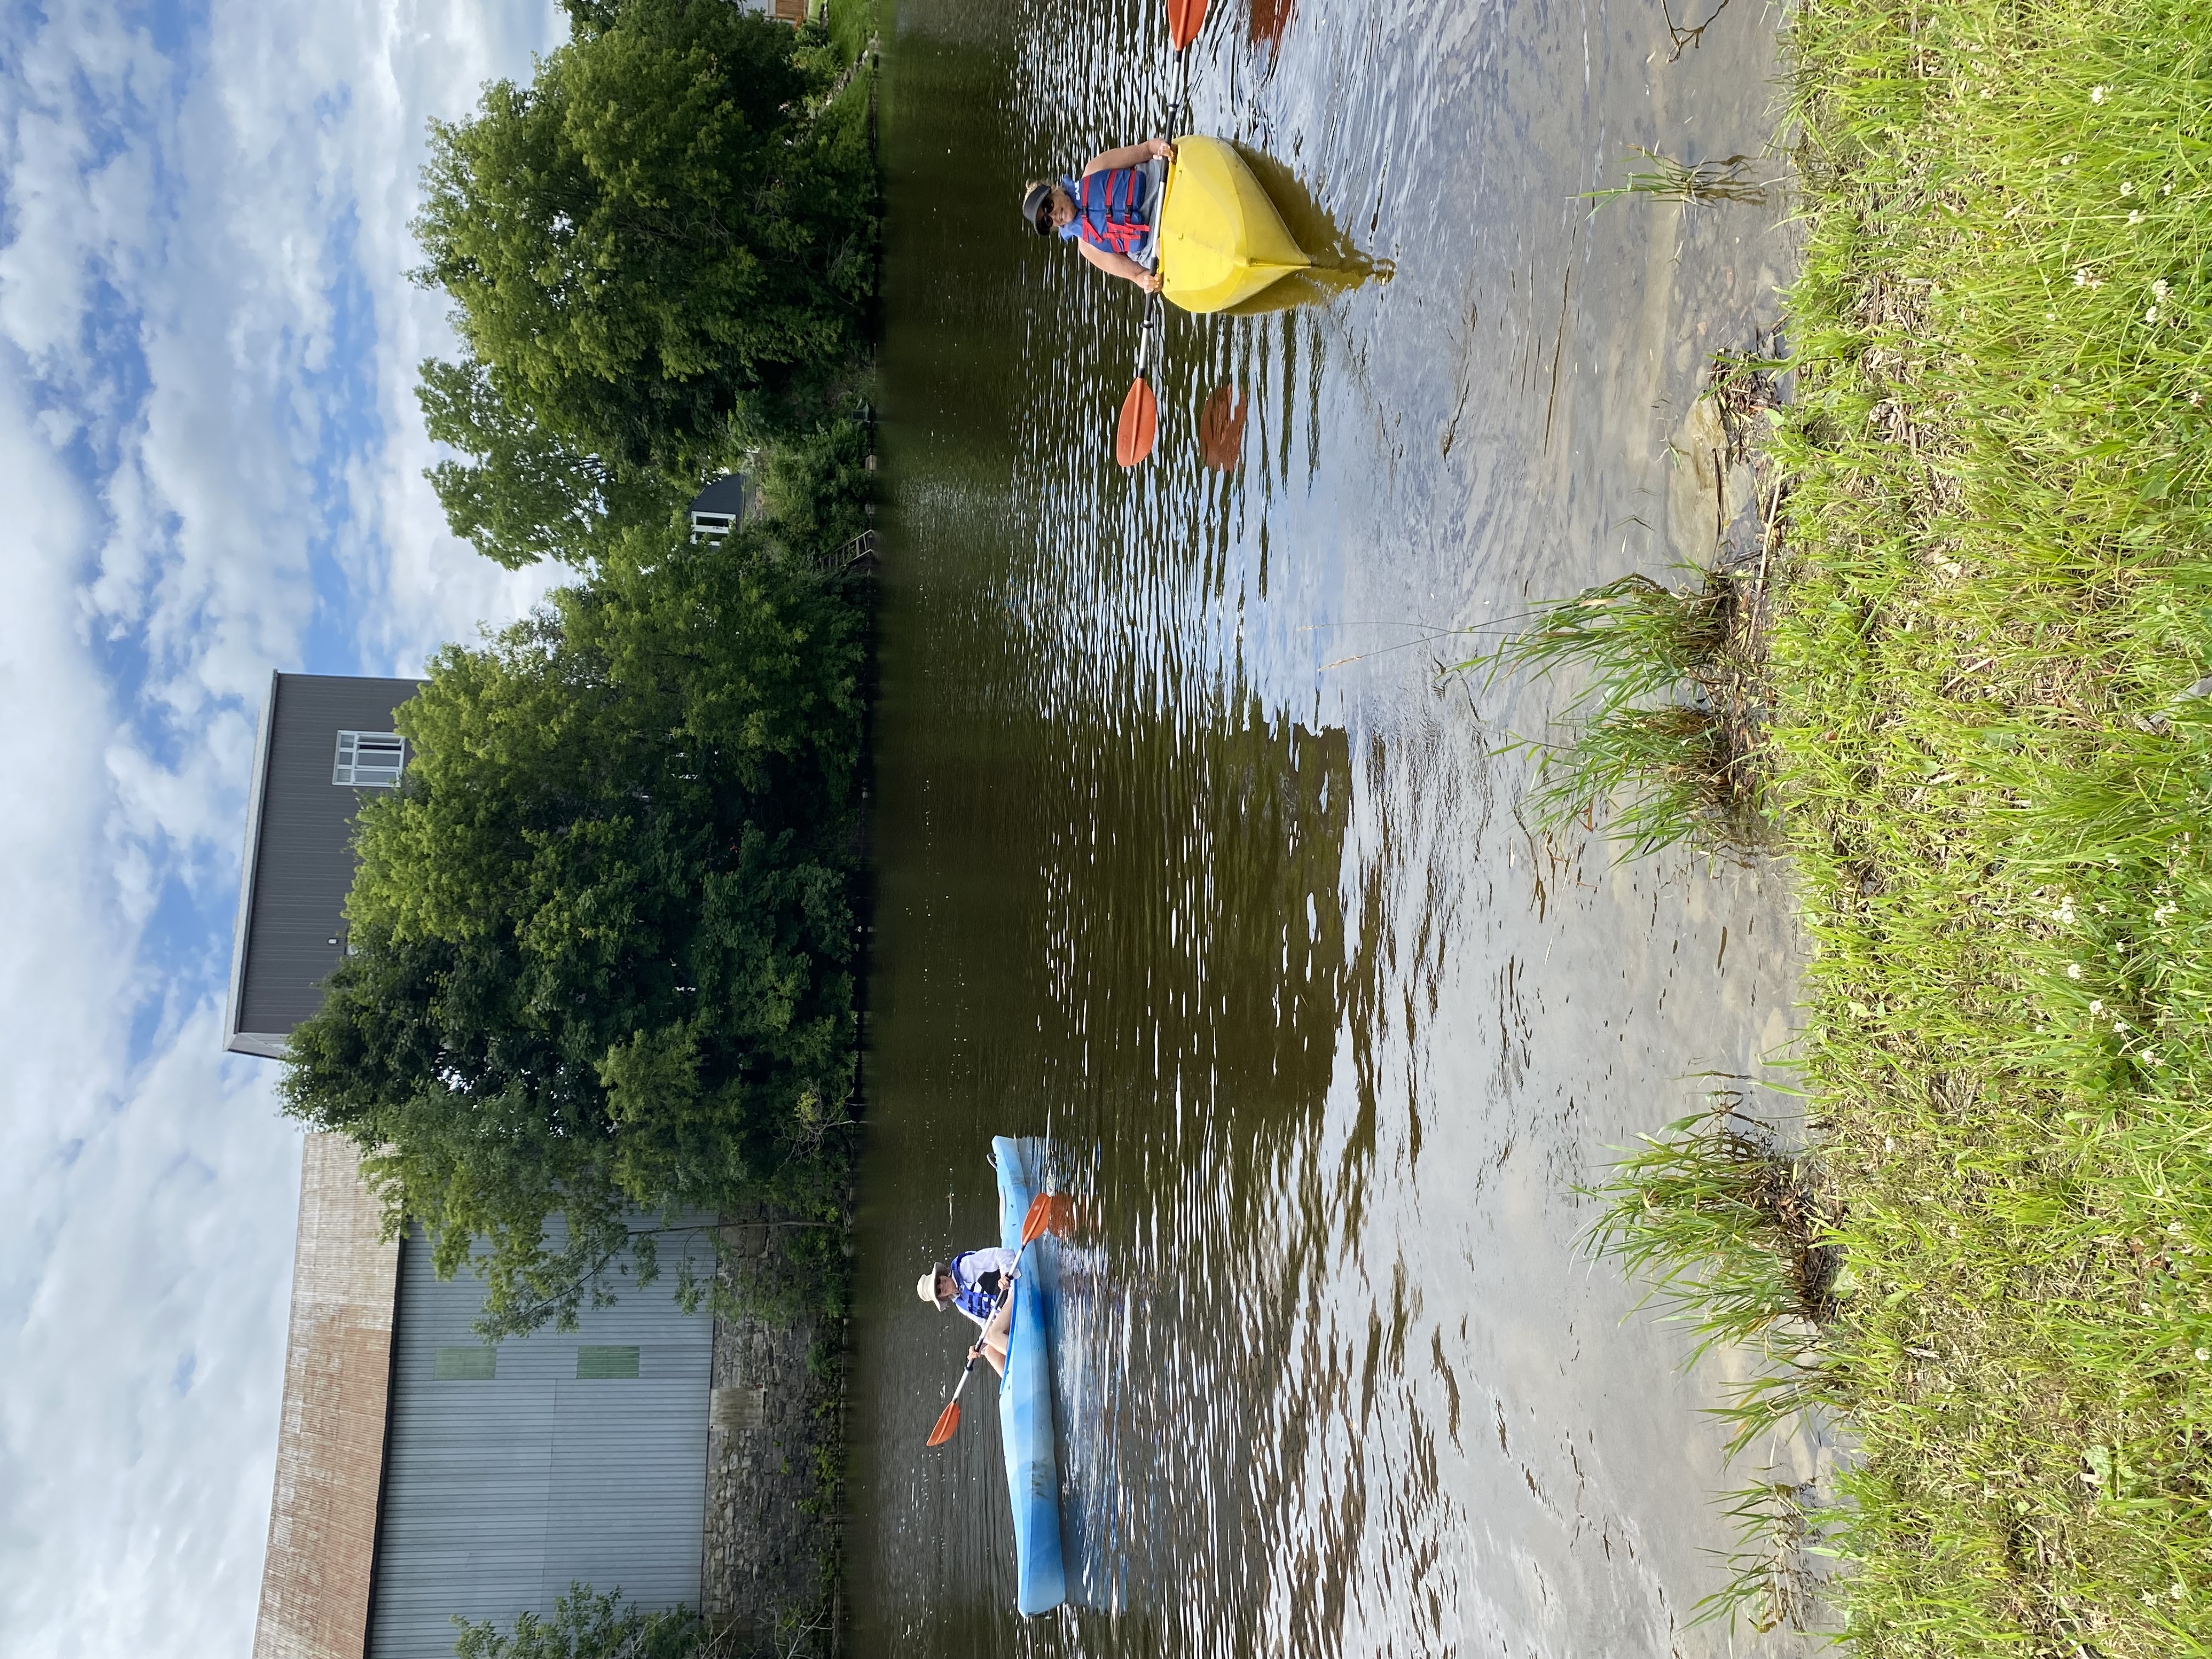 yellow kayak on river